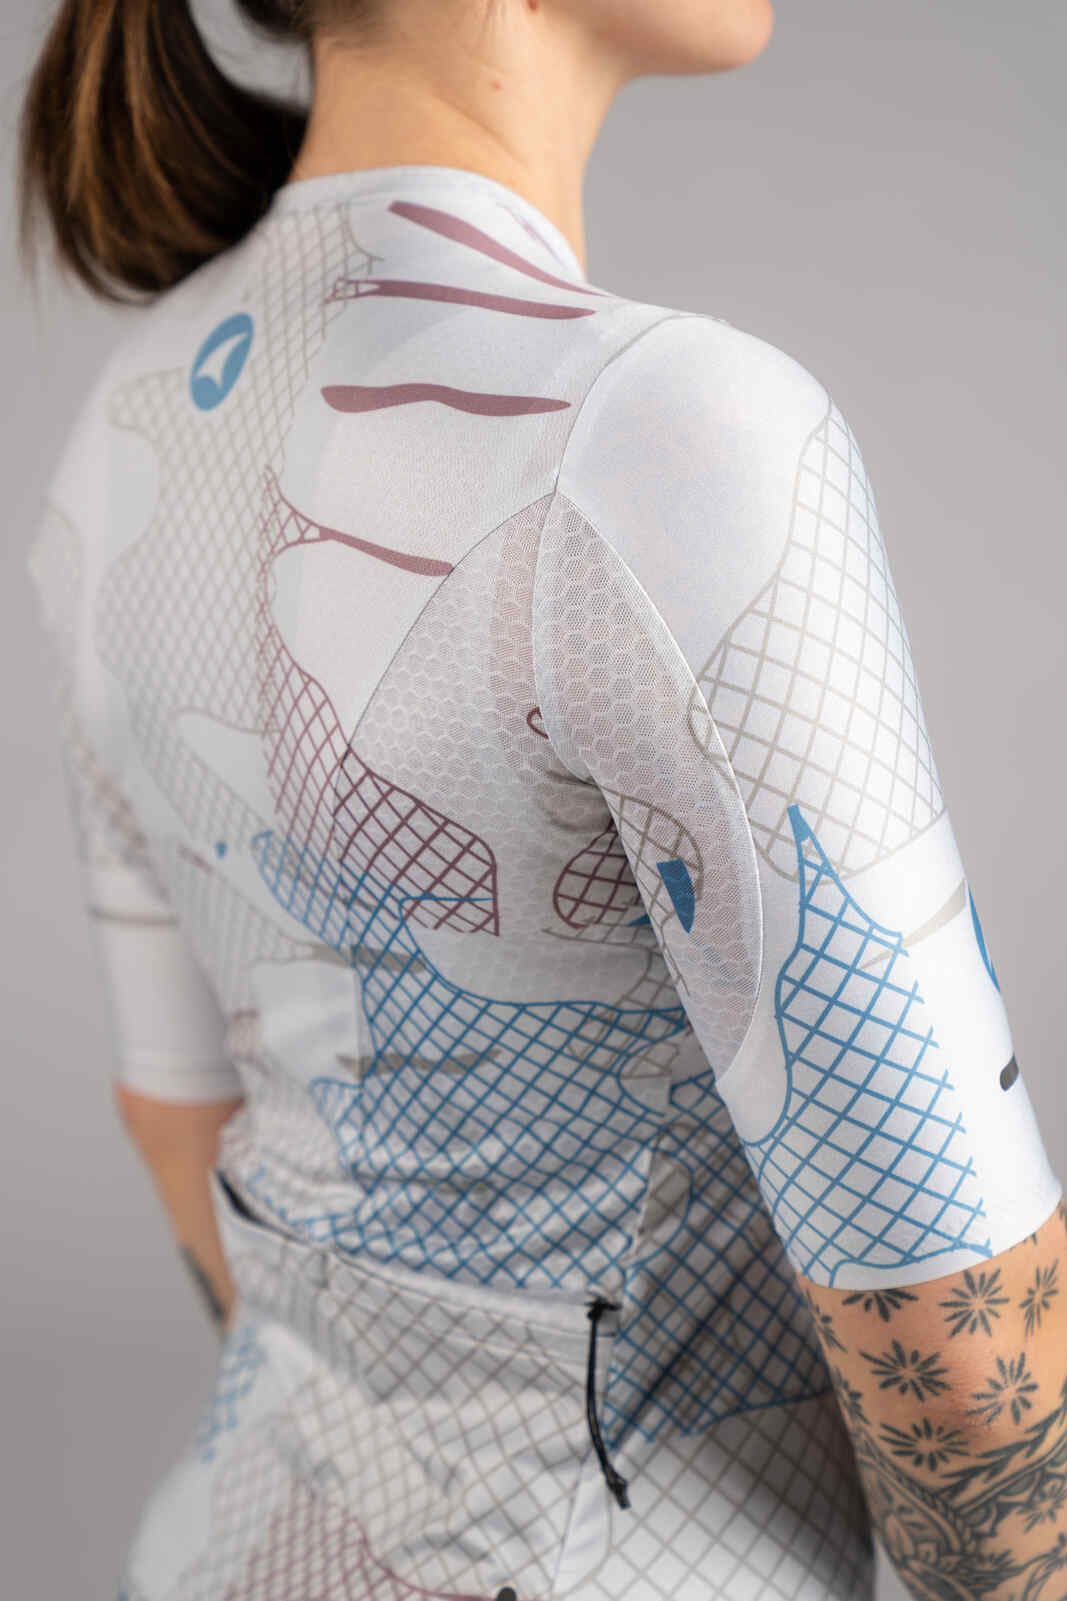 Women's White Gravel Cycling Jersey - Underarm Mesh Fabric Close-Up